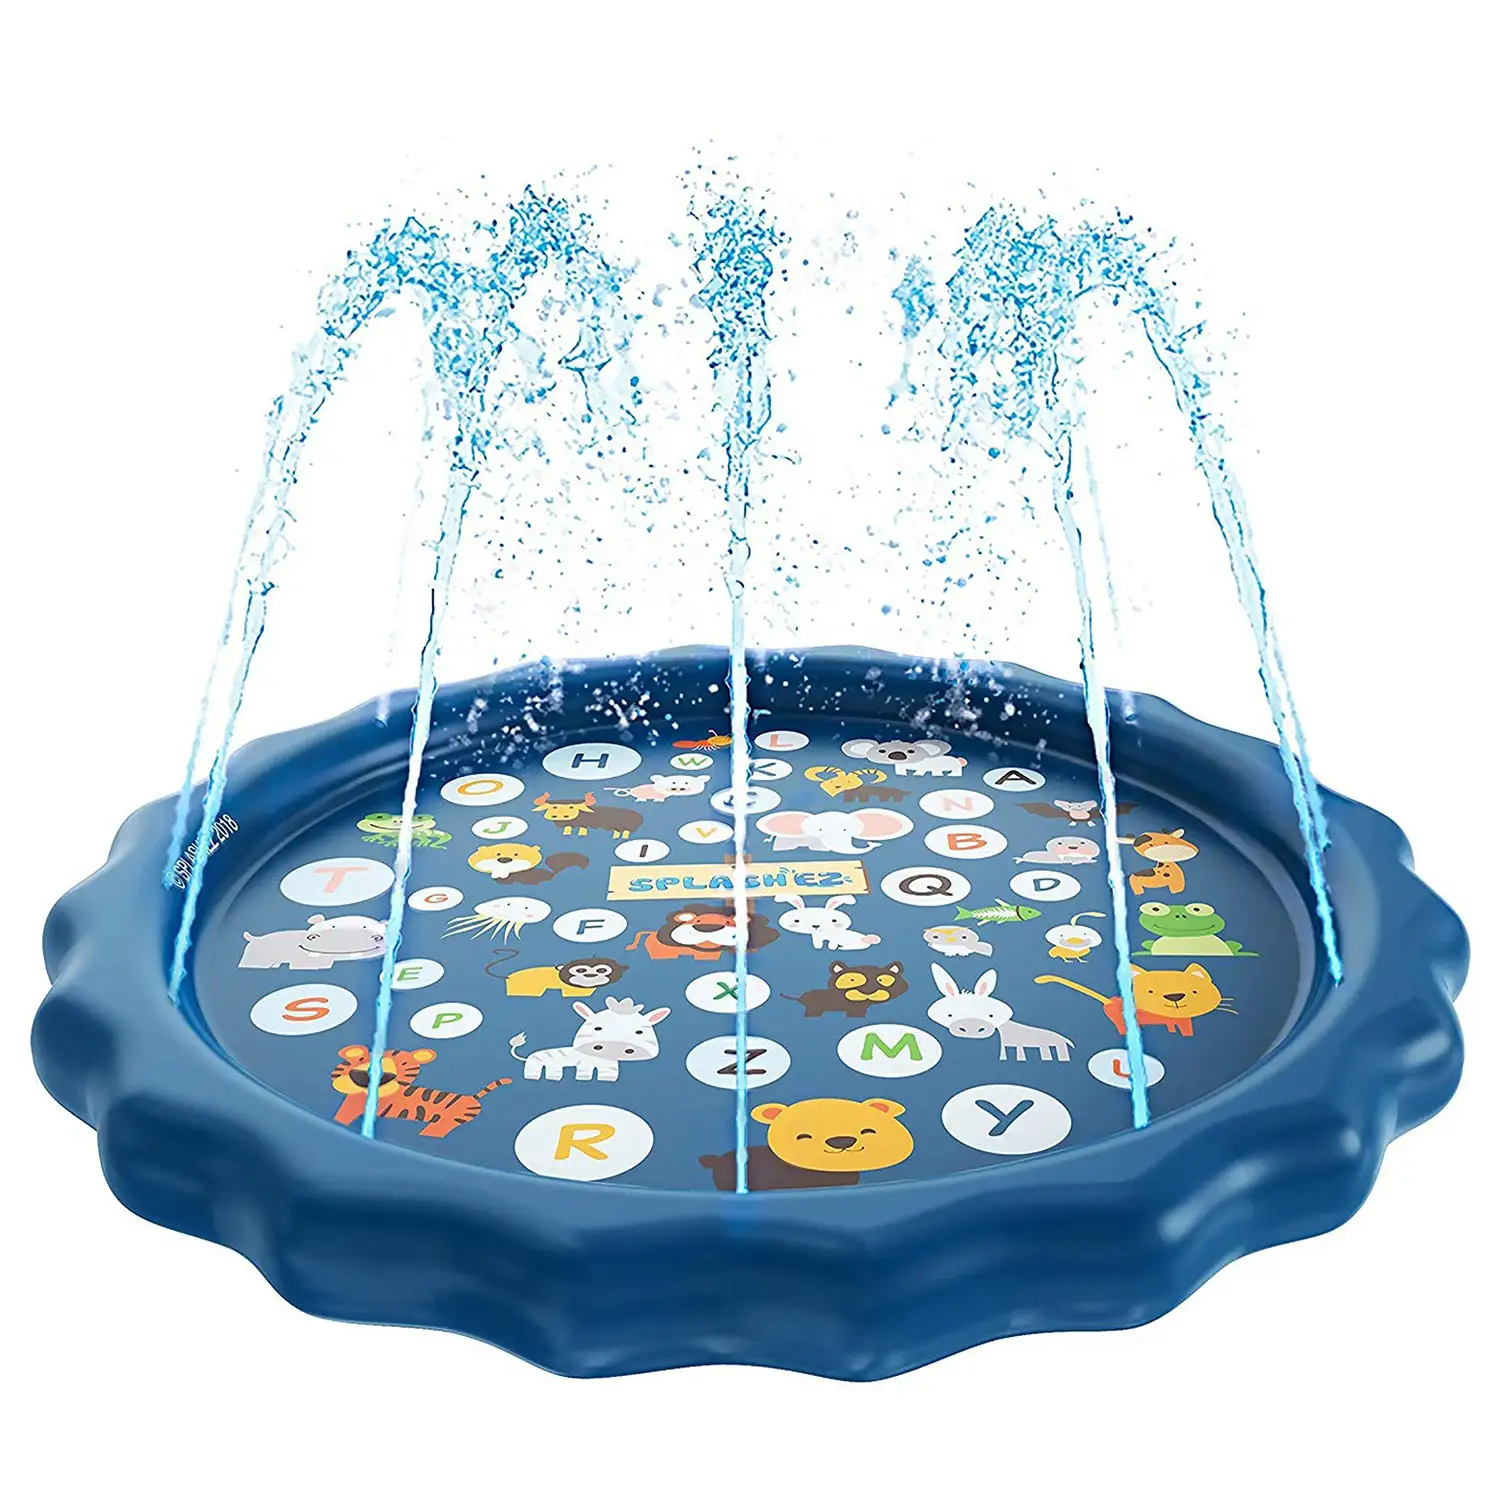 Splash Pad. Juguete inflable con aspersor de agua para jugar. 170cm de diámetro. Diseño animalitos.